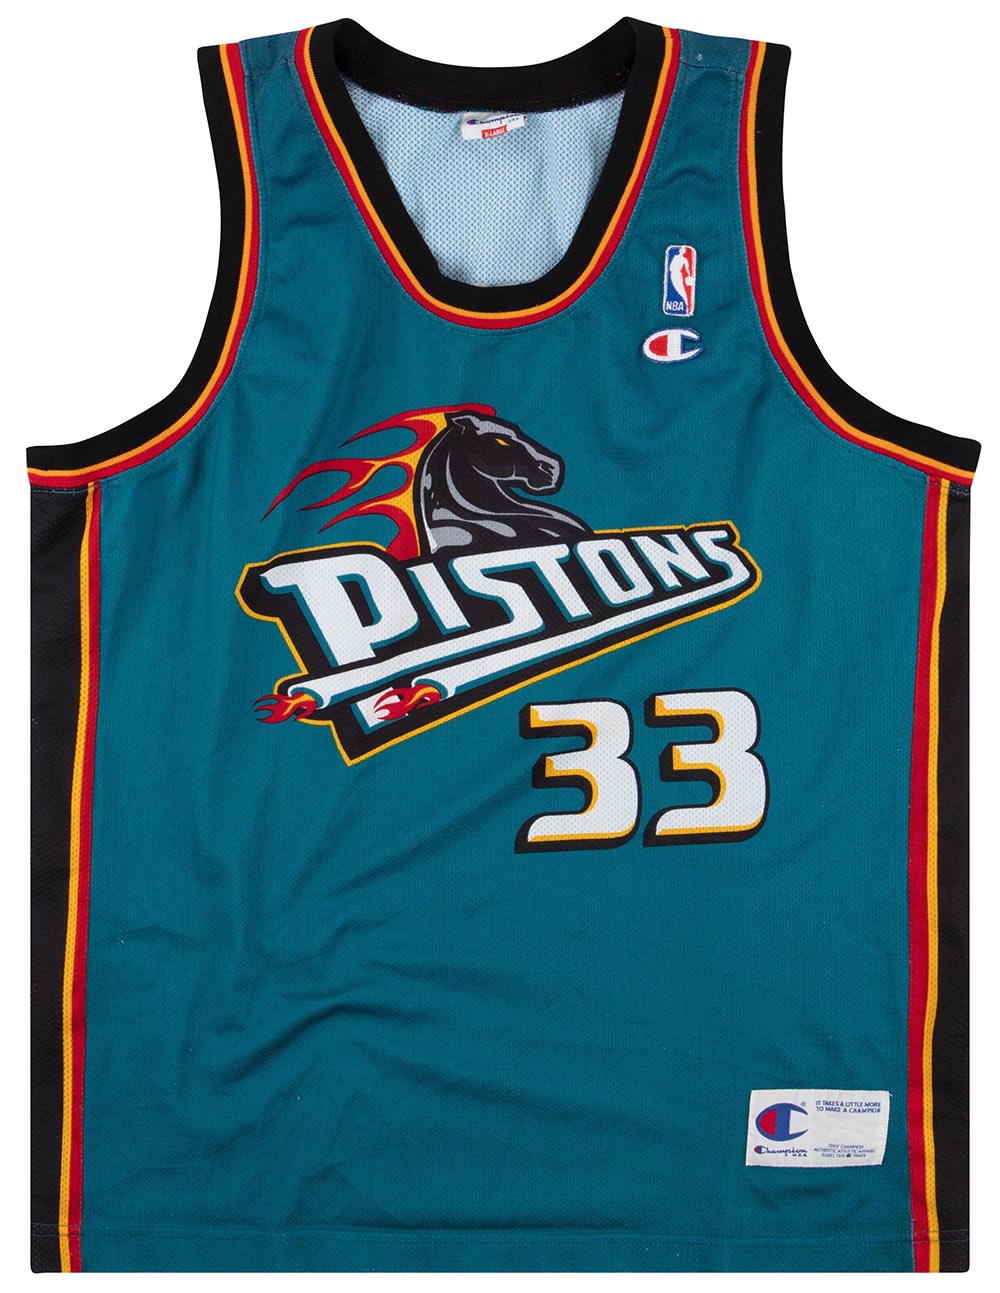 Vintage NBA Champion Jersey Detroit Pistons Grant Hill Jersey Sz YOUTH XL  18-20